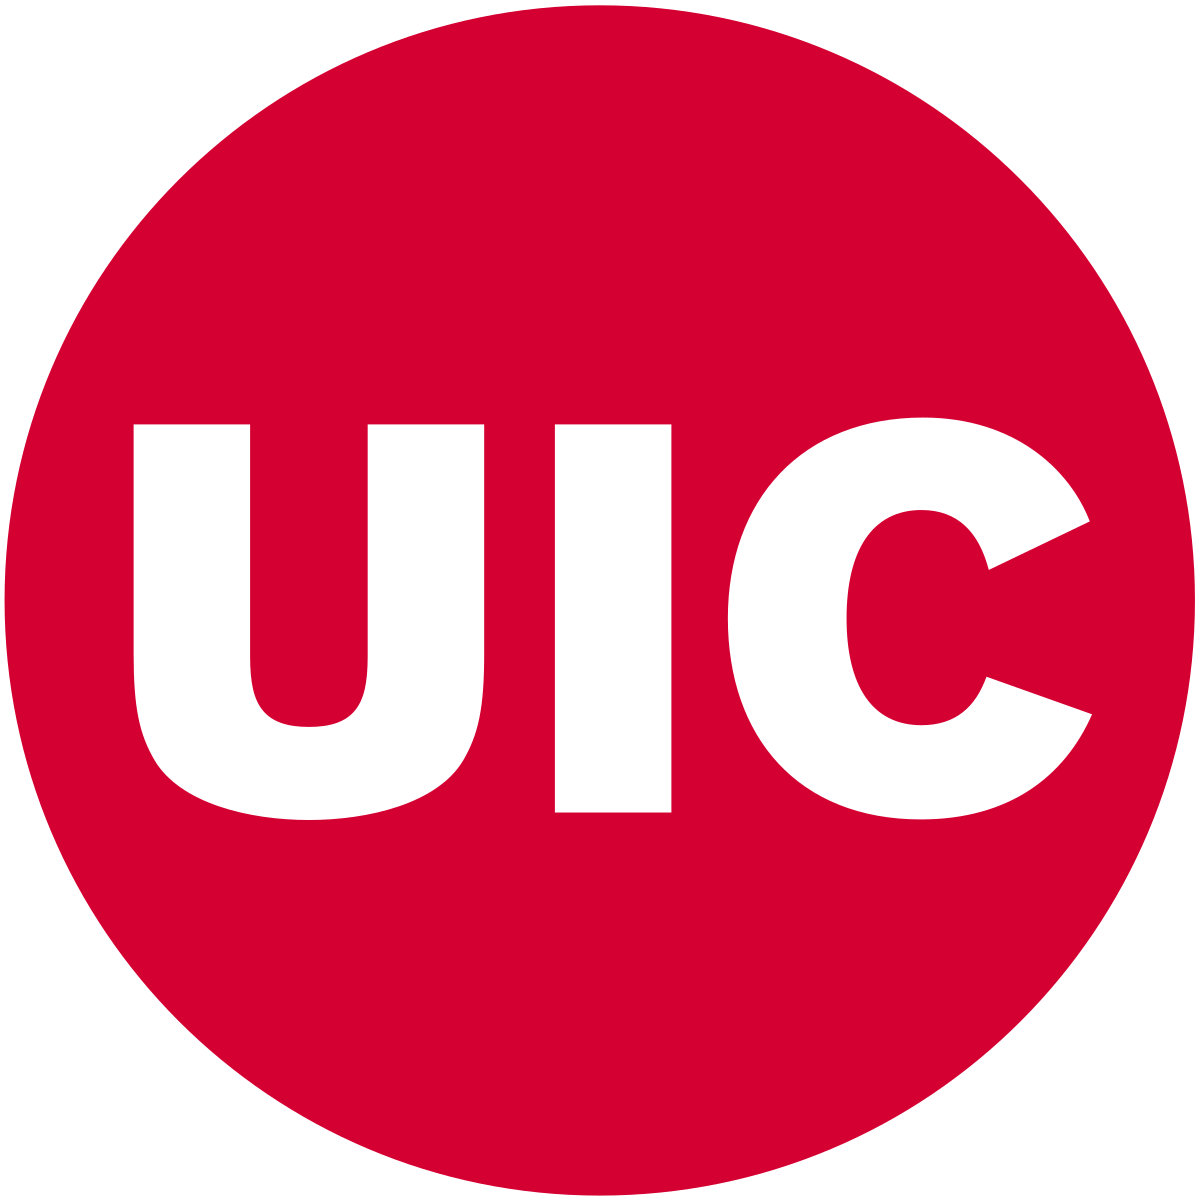 uic logo